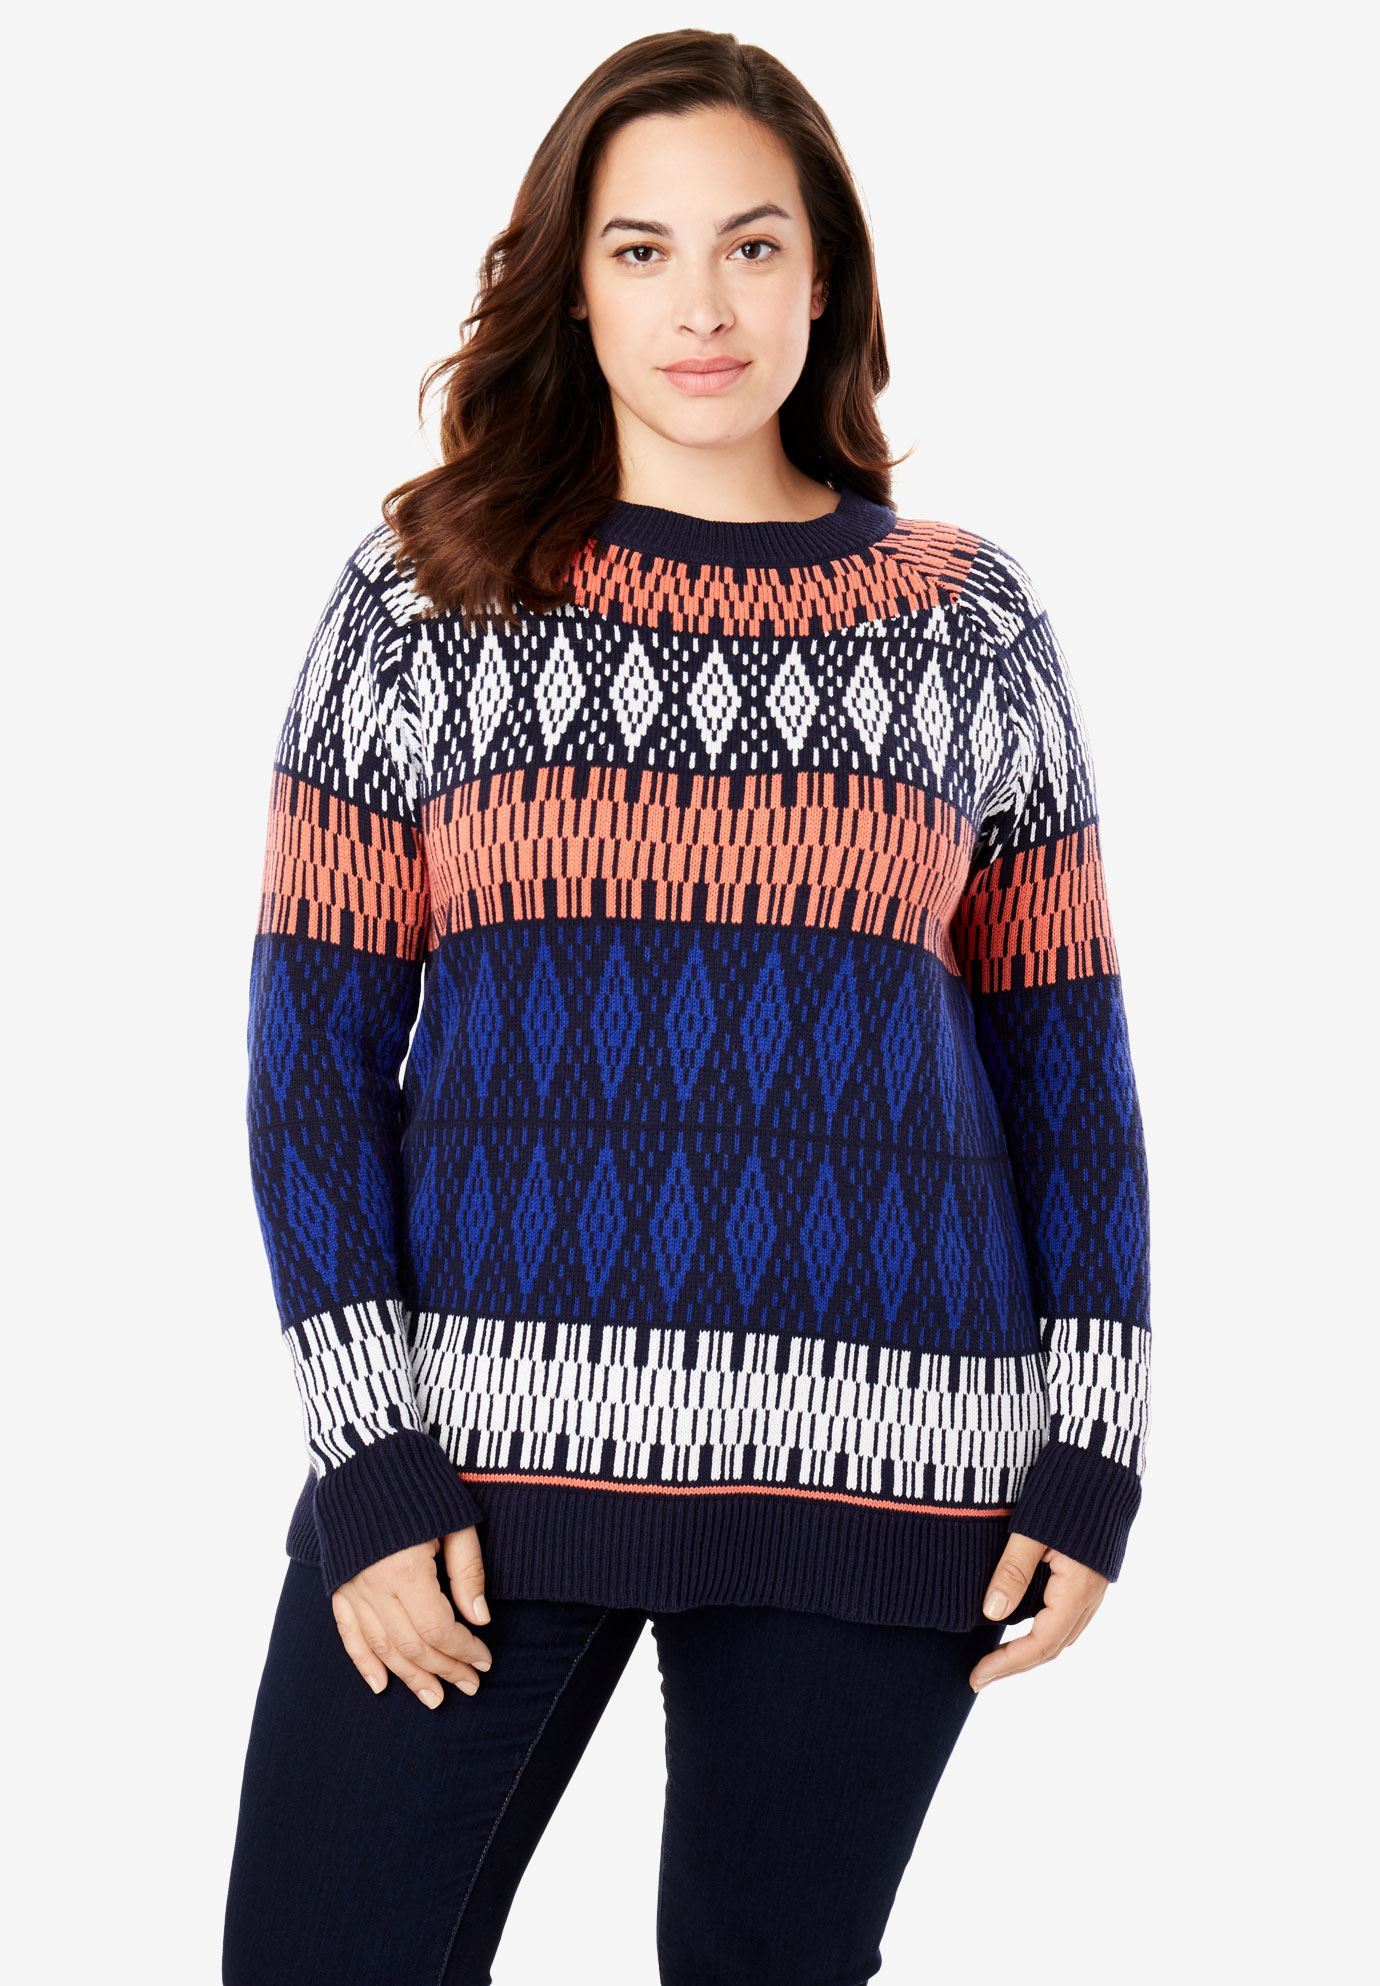 Florence plus size sweaters for womengkdyejgyfvbdyg hfdj online